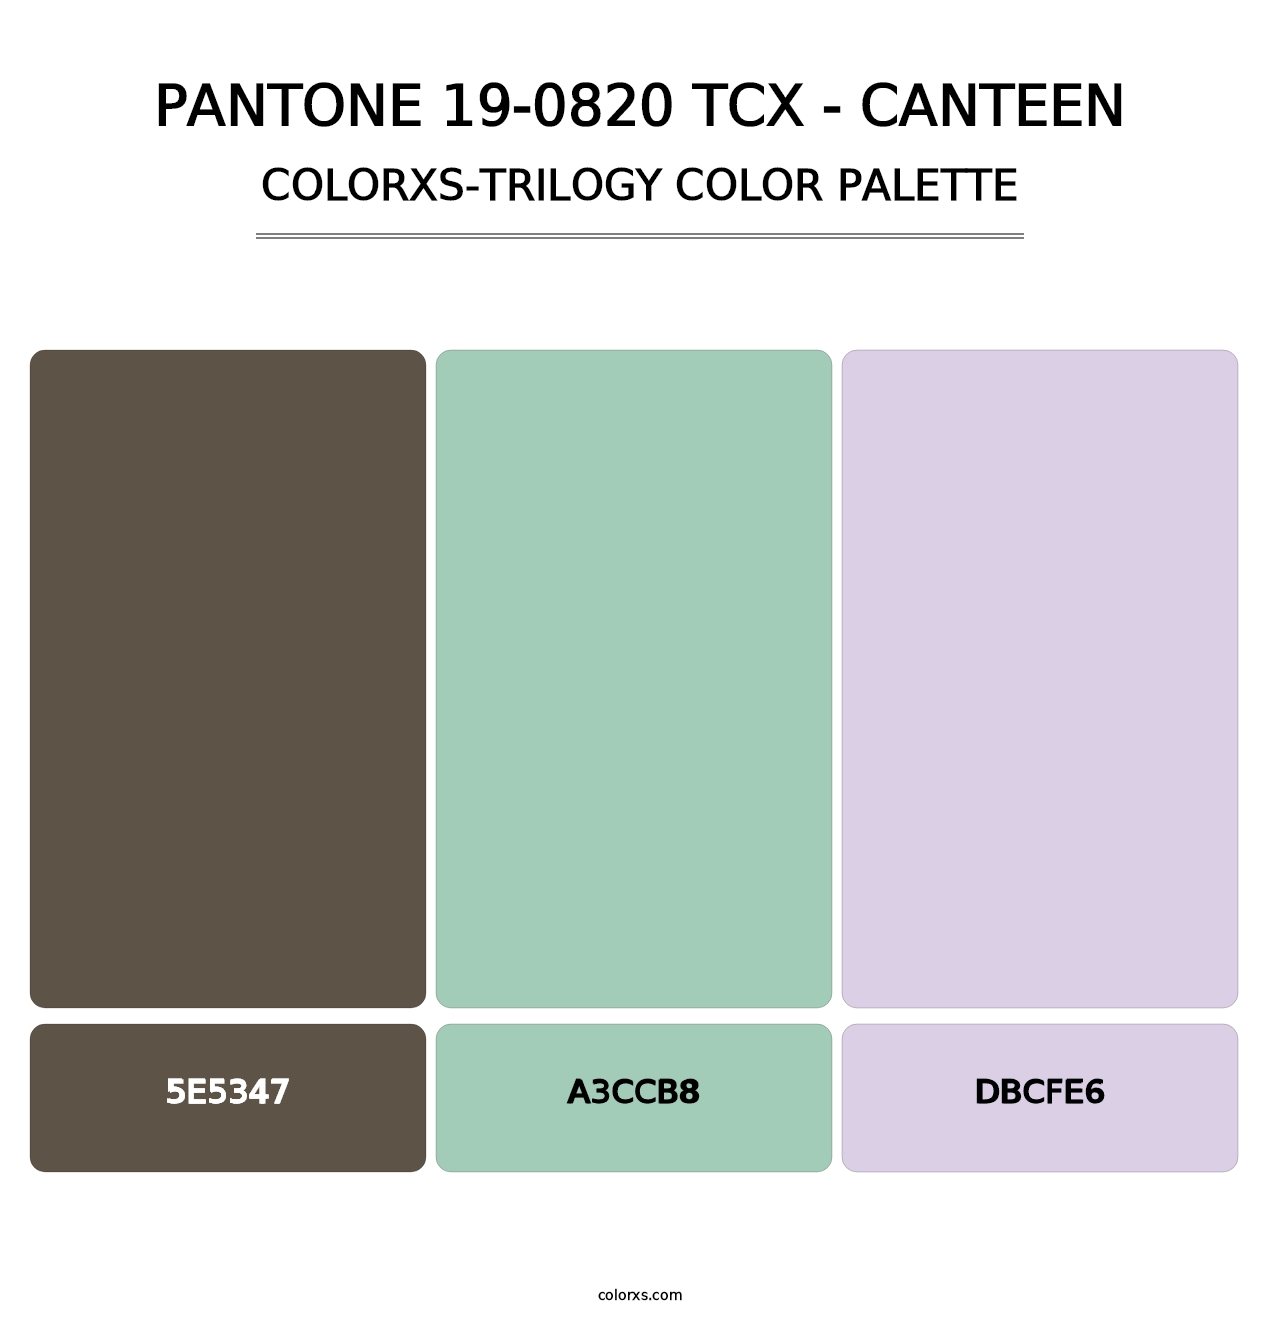 PANTONE 19-0820 TCX - Canteen - Colorxs Trilogy Palette